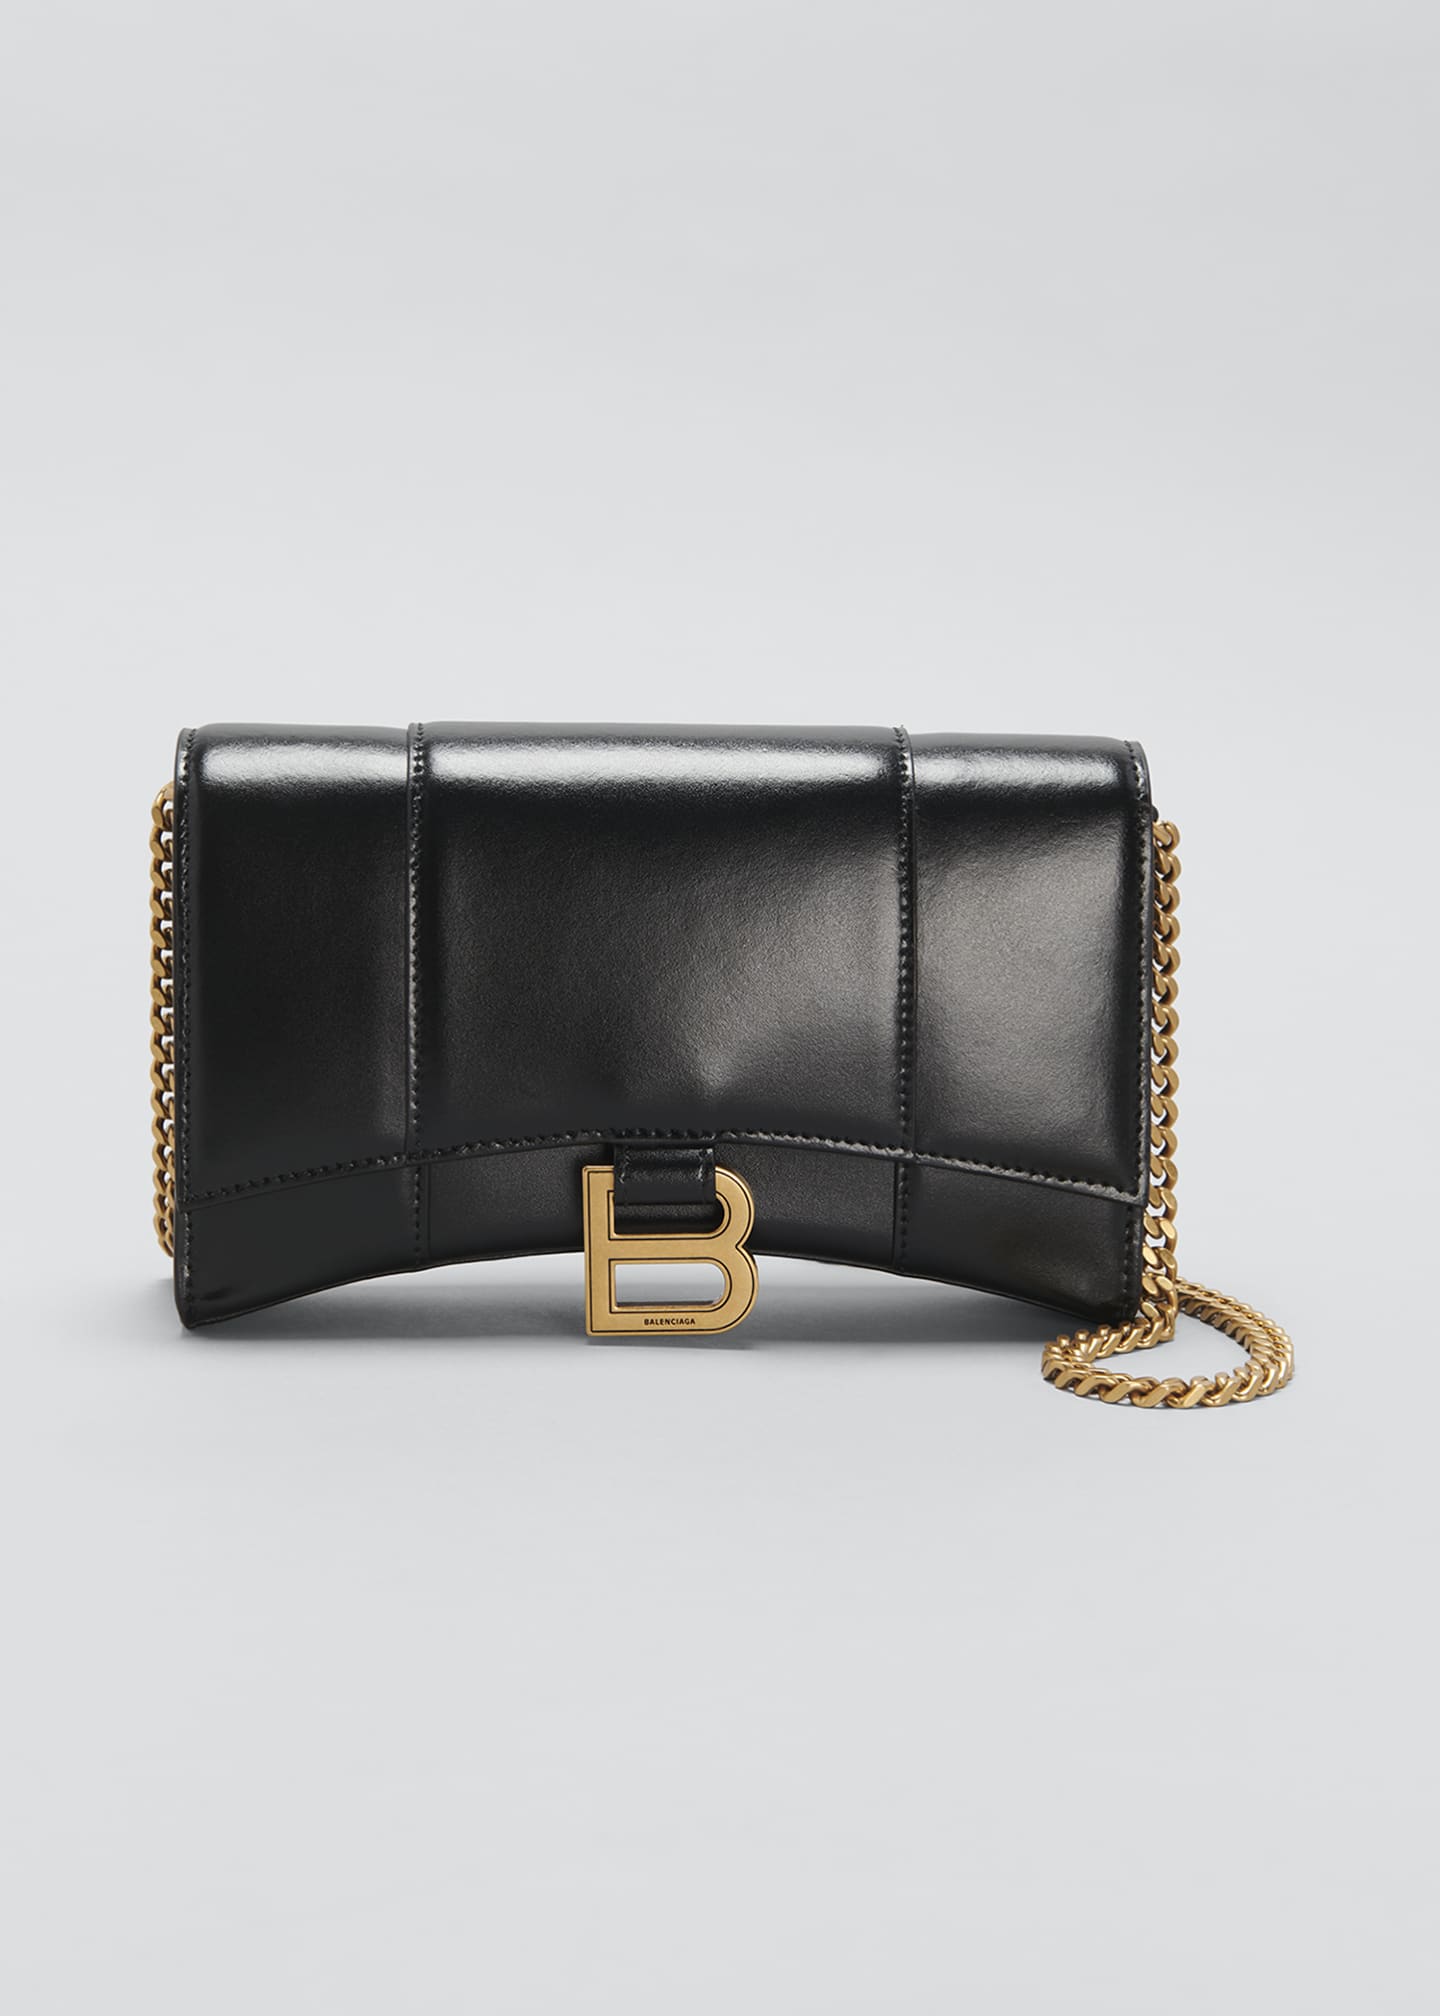 Balenciaga Hourglass Chain Leather Wallet on Chain - Bergdorf Goodman